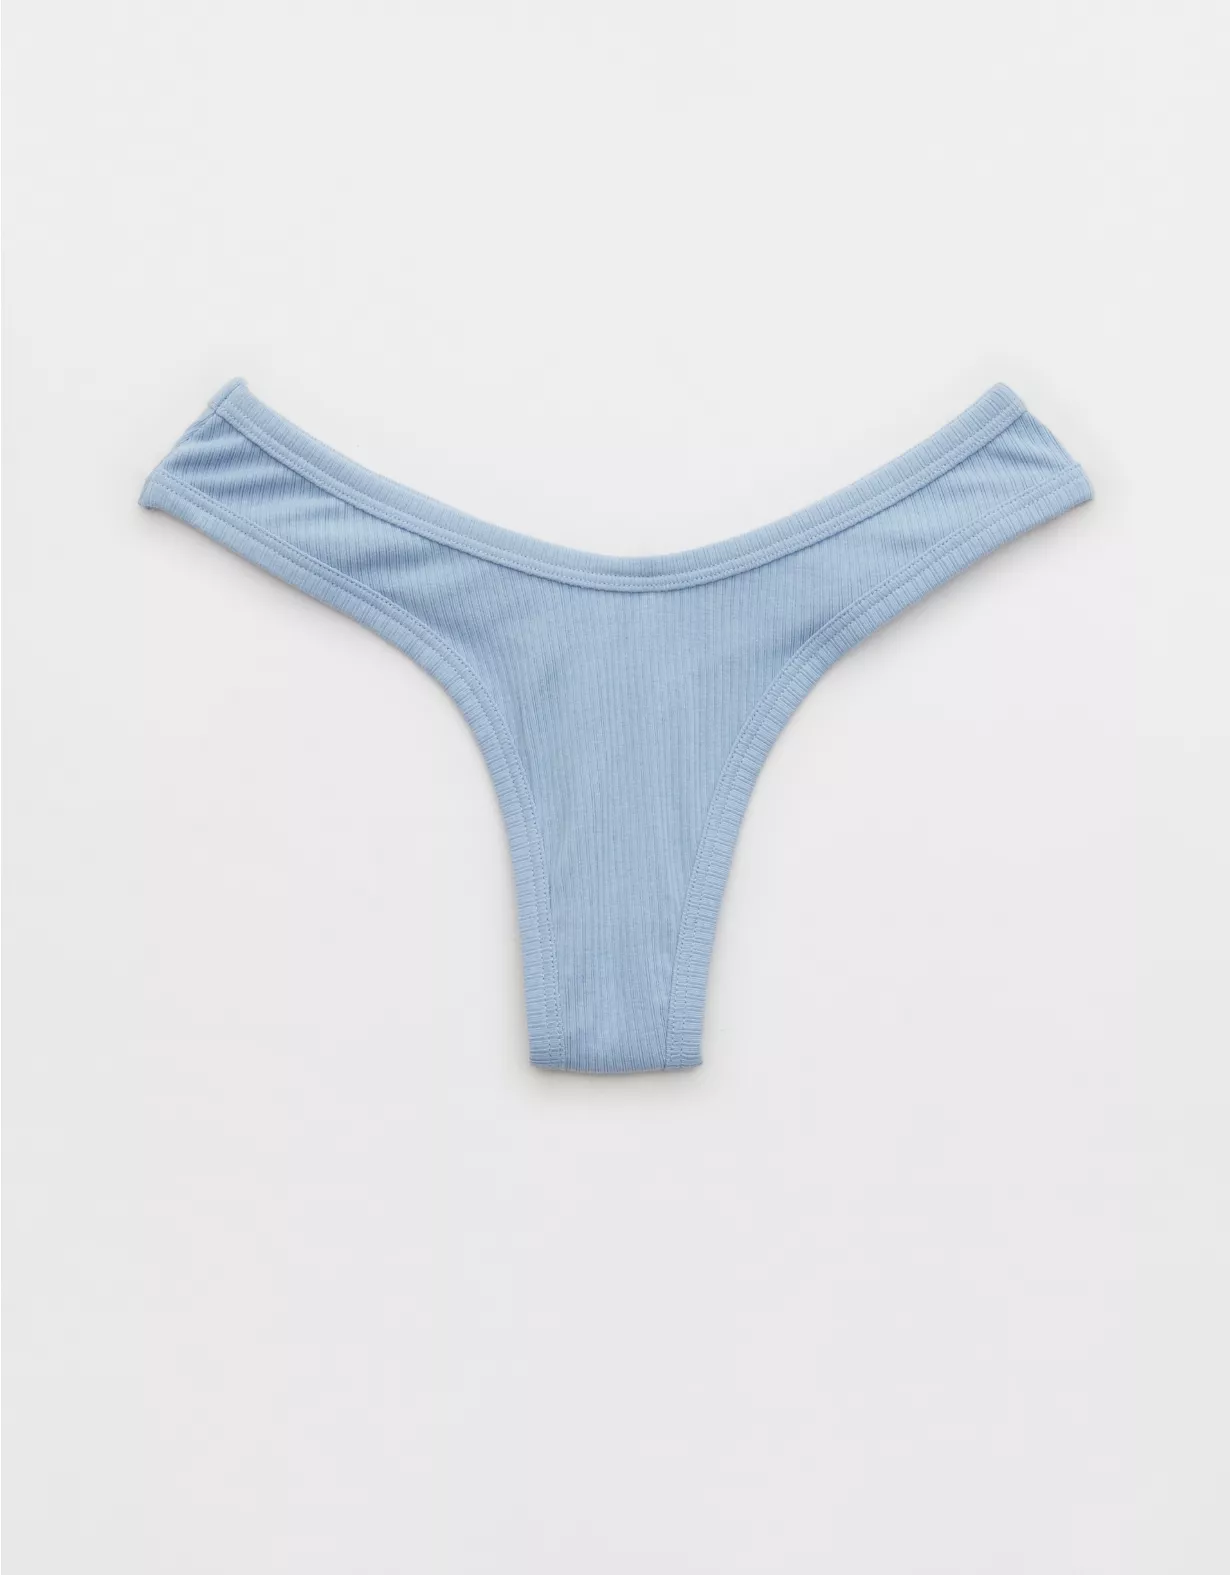 Mal Molester Negrita Aerie Ribbed Cotton High Cut Thong Underwear